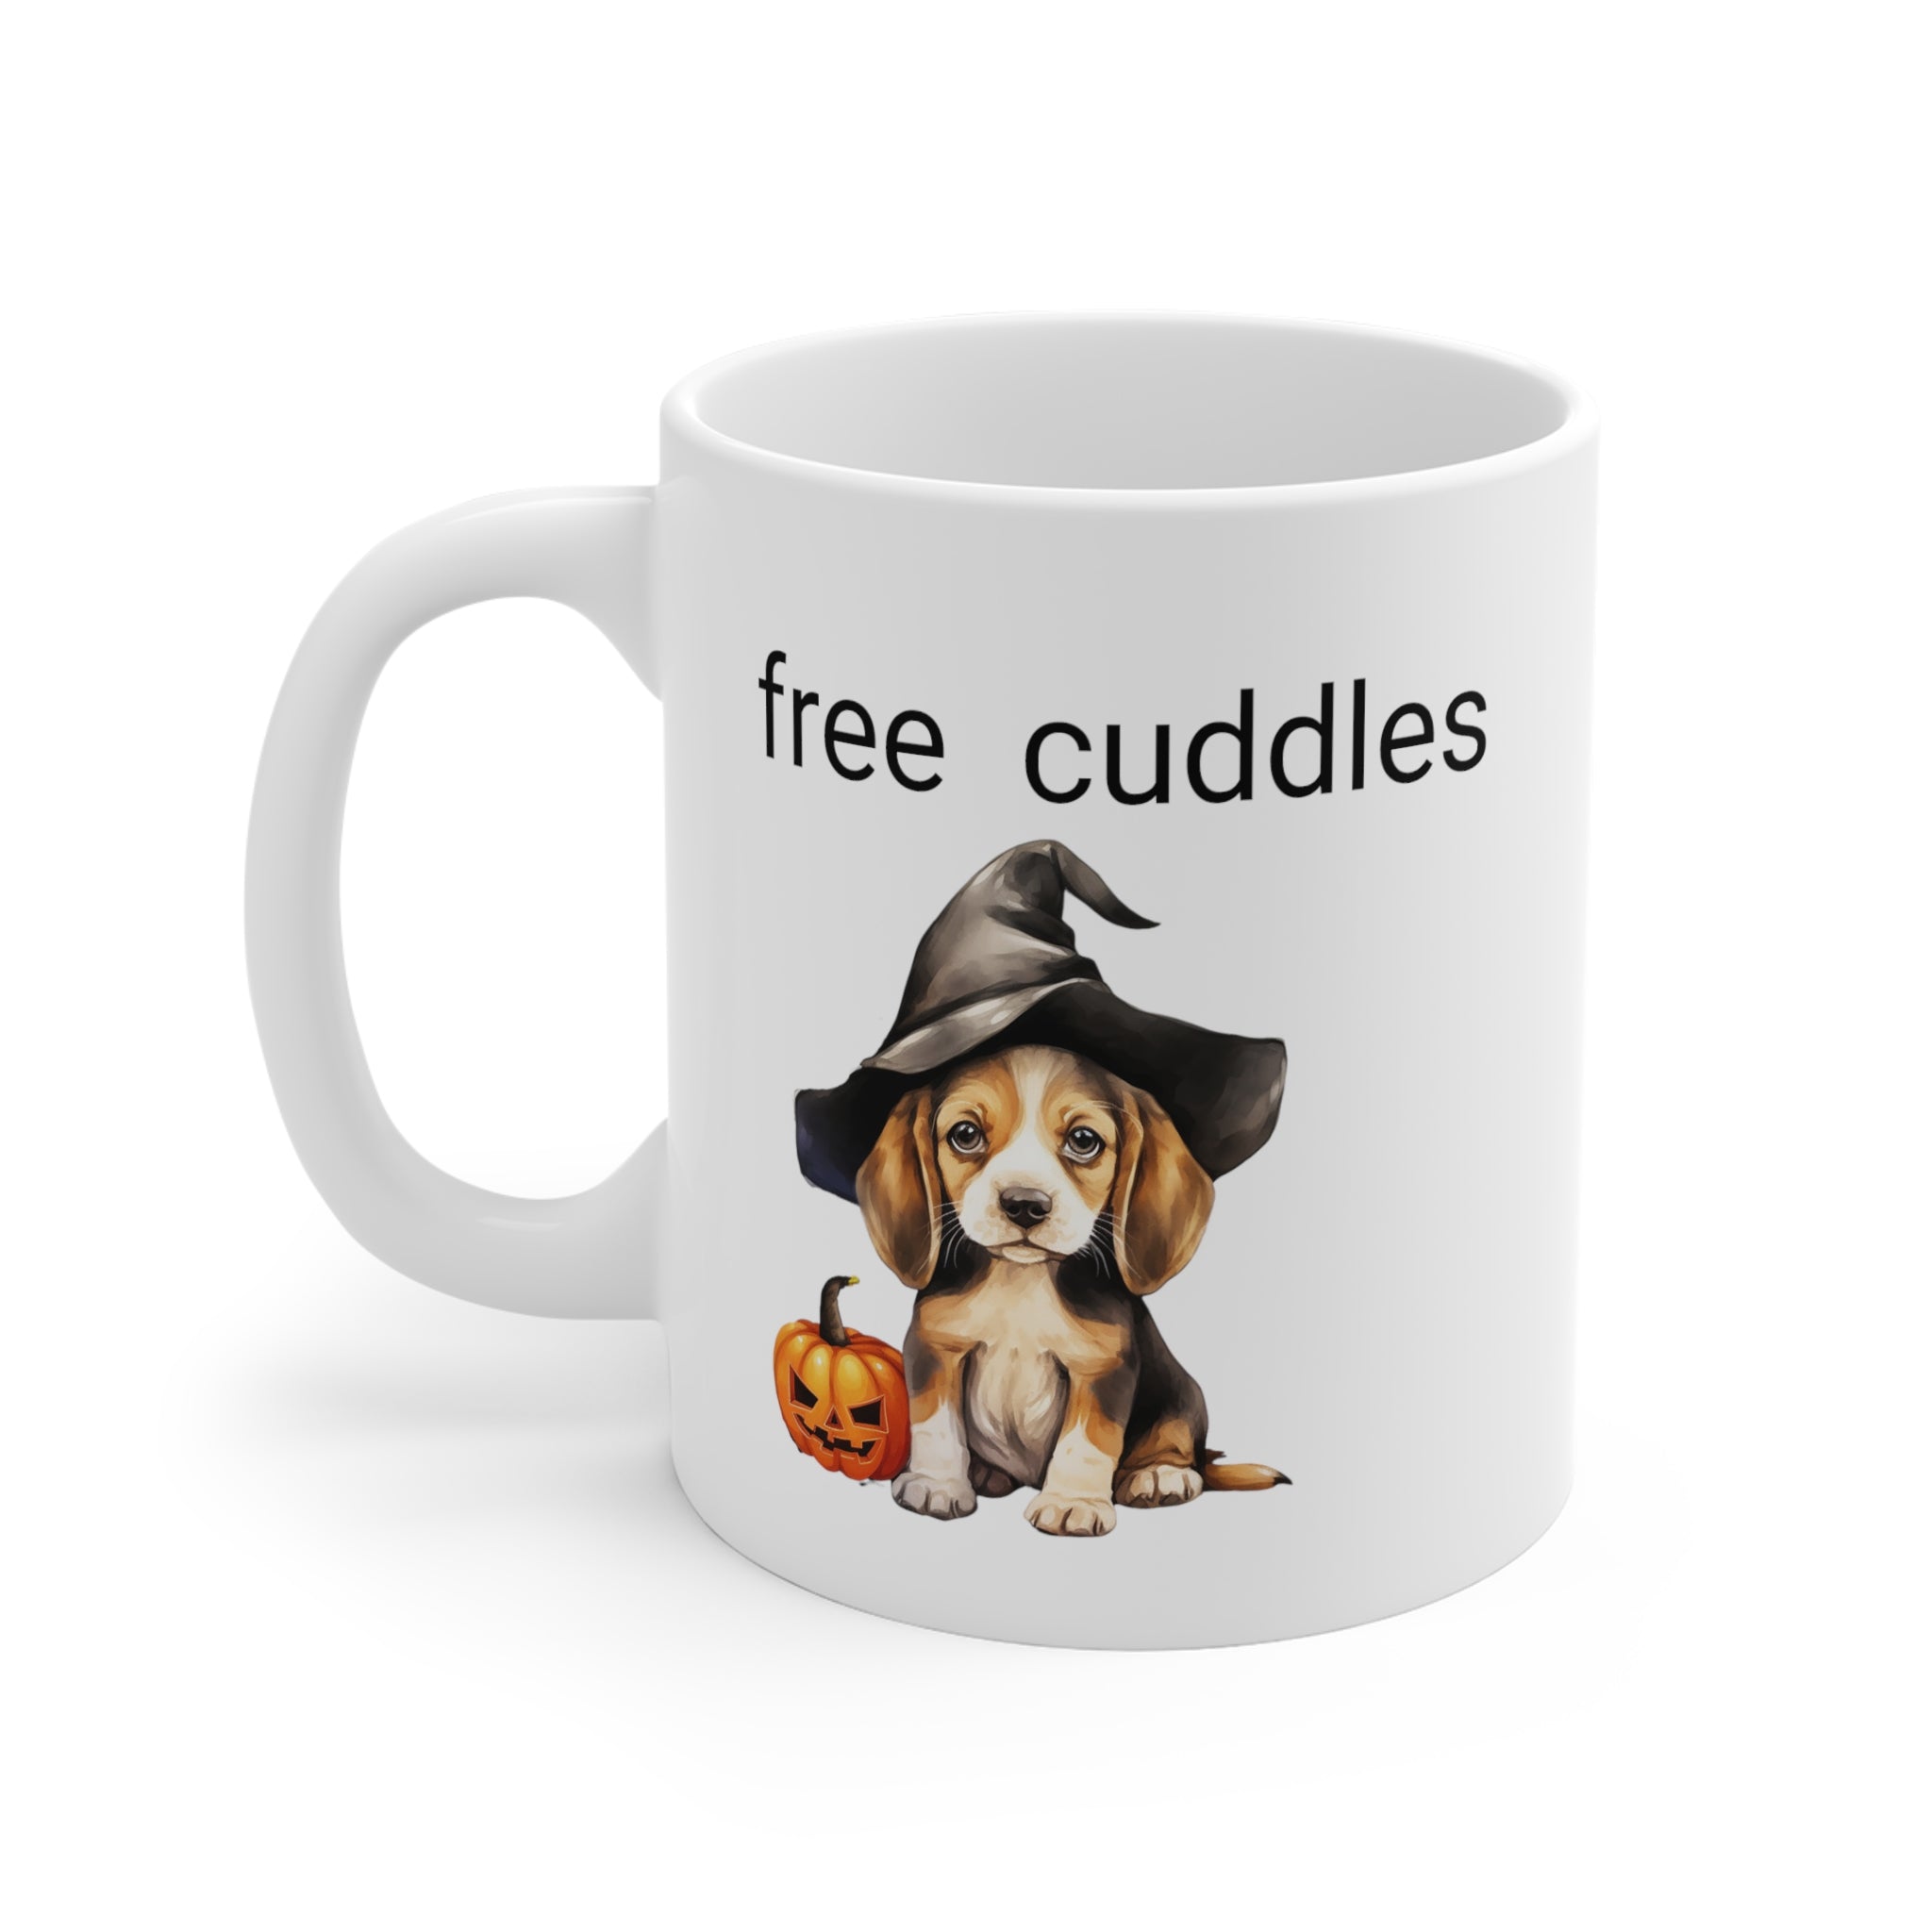 Halloween coffee mug puppy cute free cuddles in witch hat  gift and stocking stuffer White Ceramic Mug